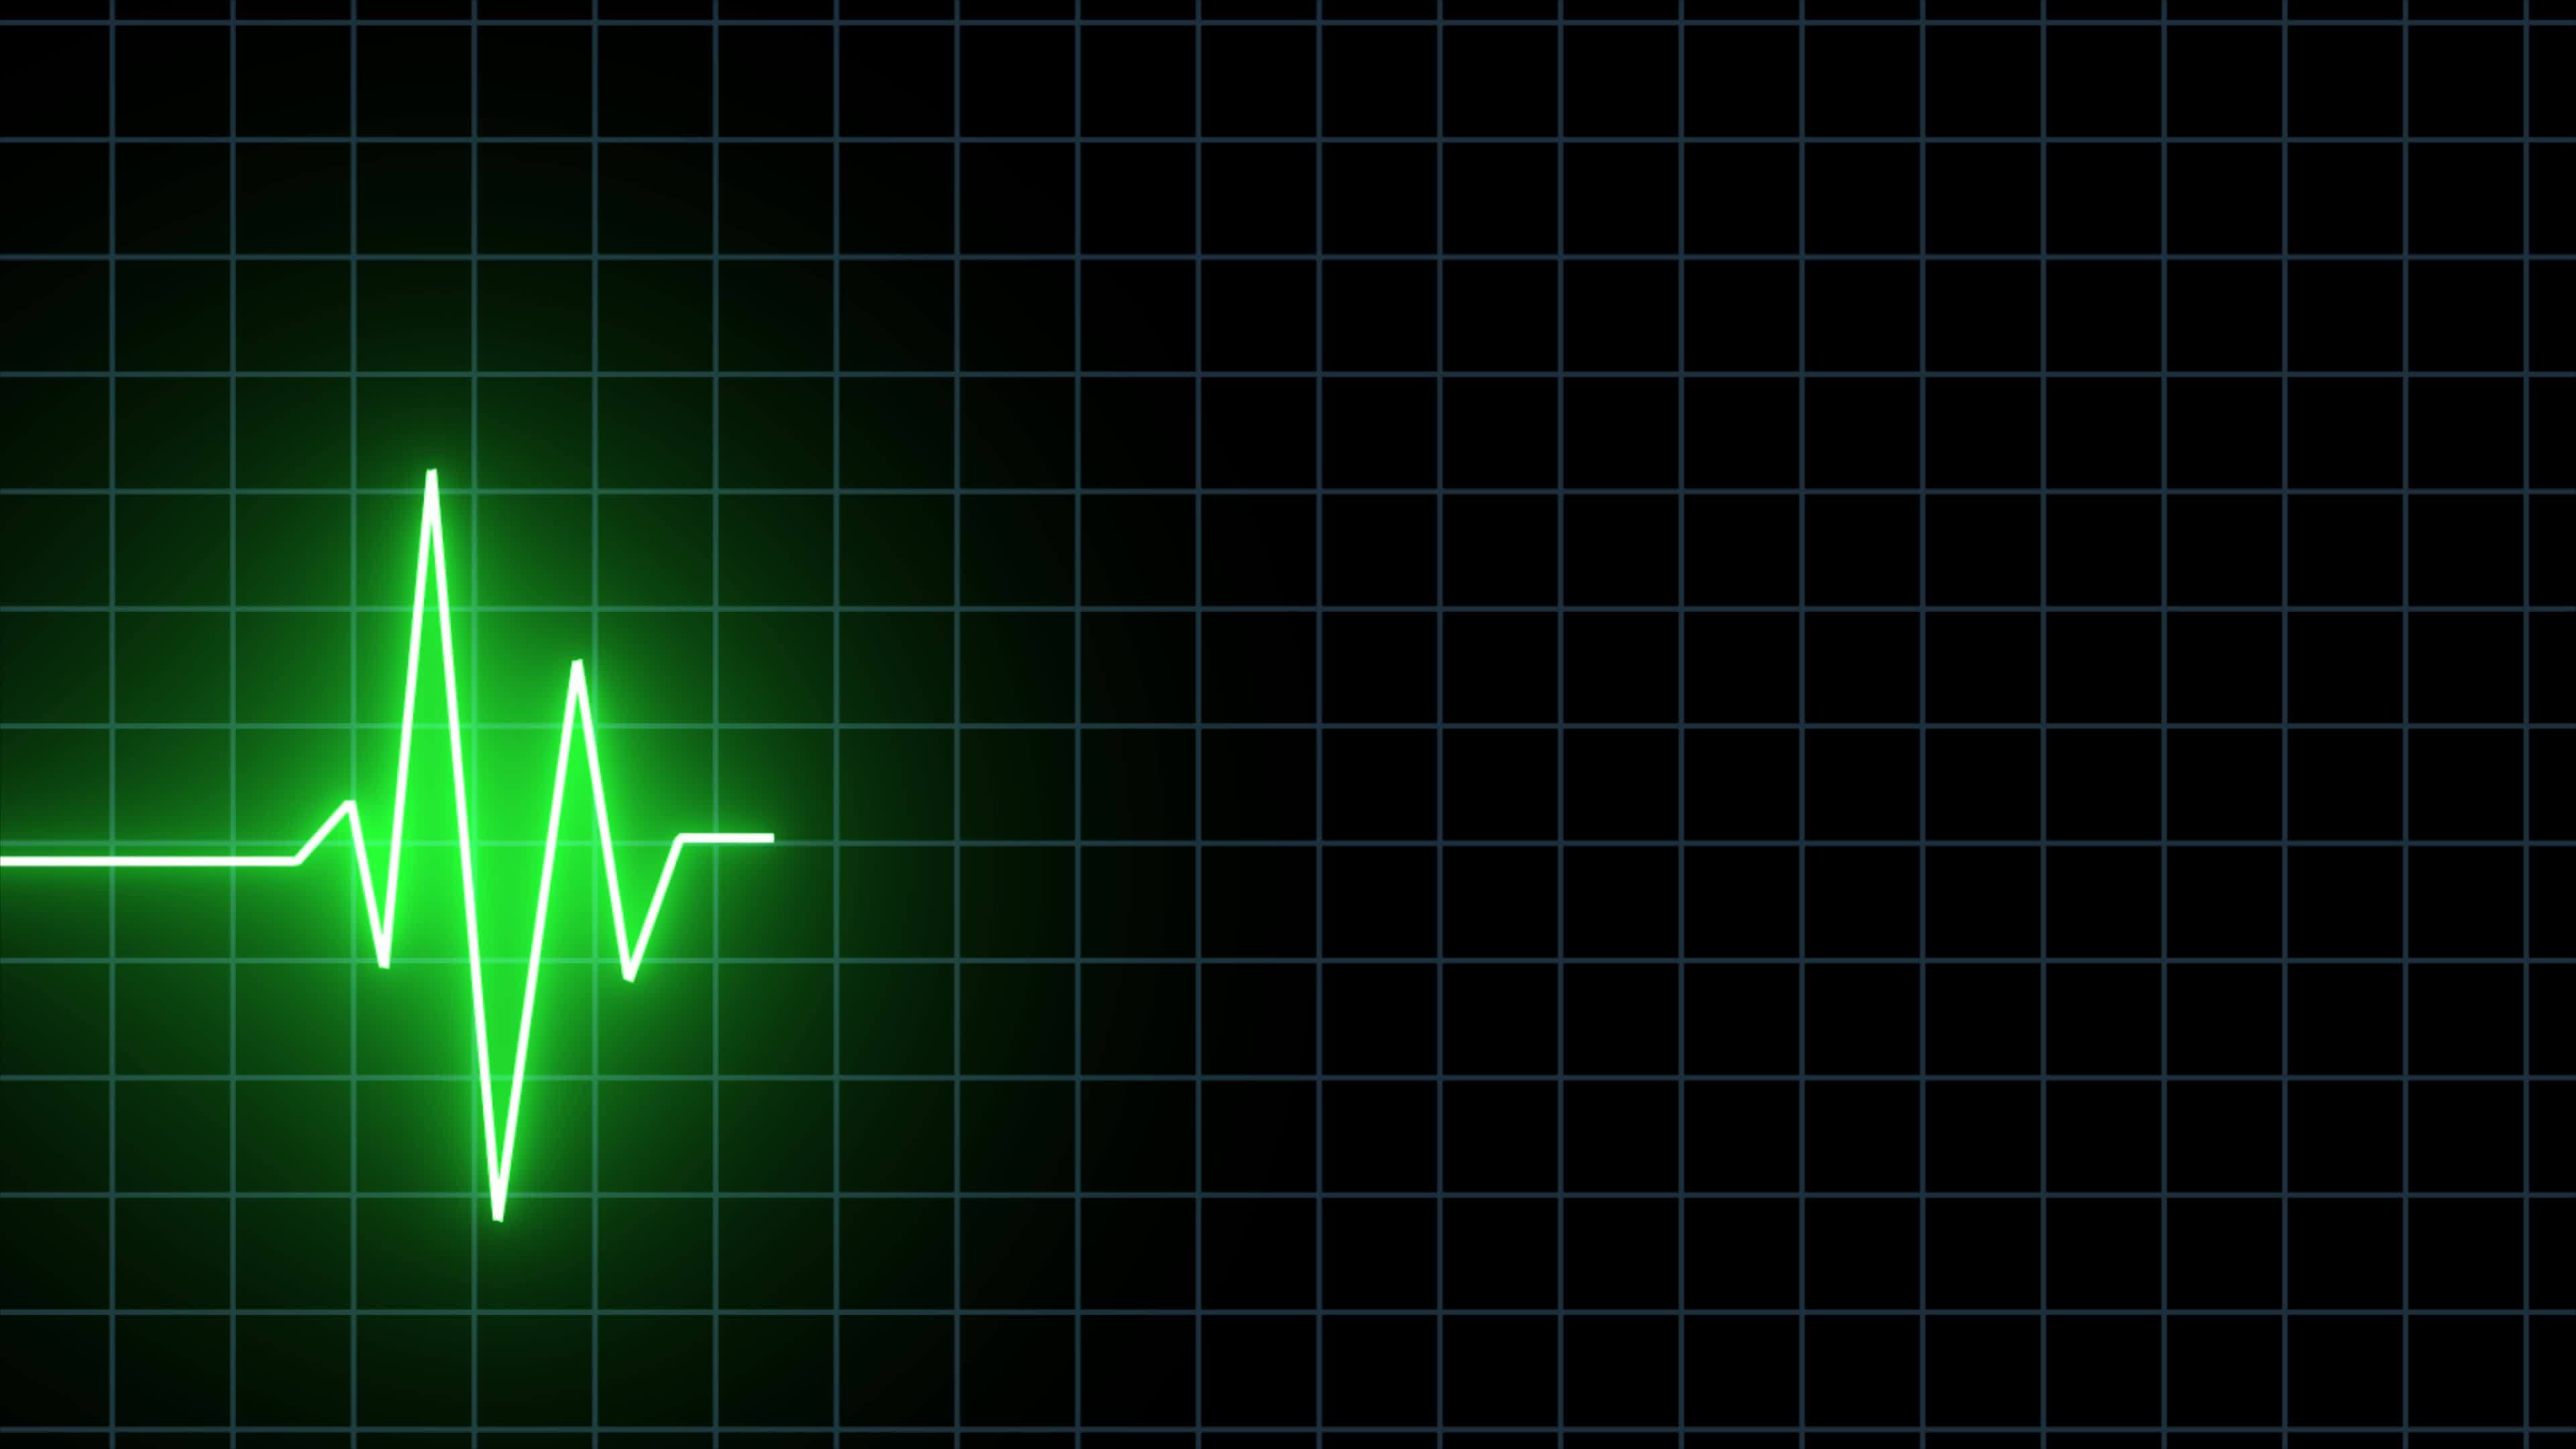 Neon Digital Heartbeat Plus Animation Over Black Bg, Heart Beat Line  Cardiogram Medical Background, Ekg Ecg Heartbeat Line Animation, Glowing  Neon Heart Rate Line Video Animation On Black Screen 14195494 Stock Video